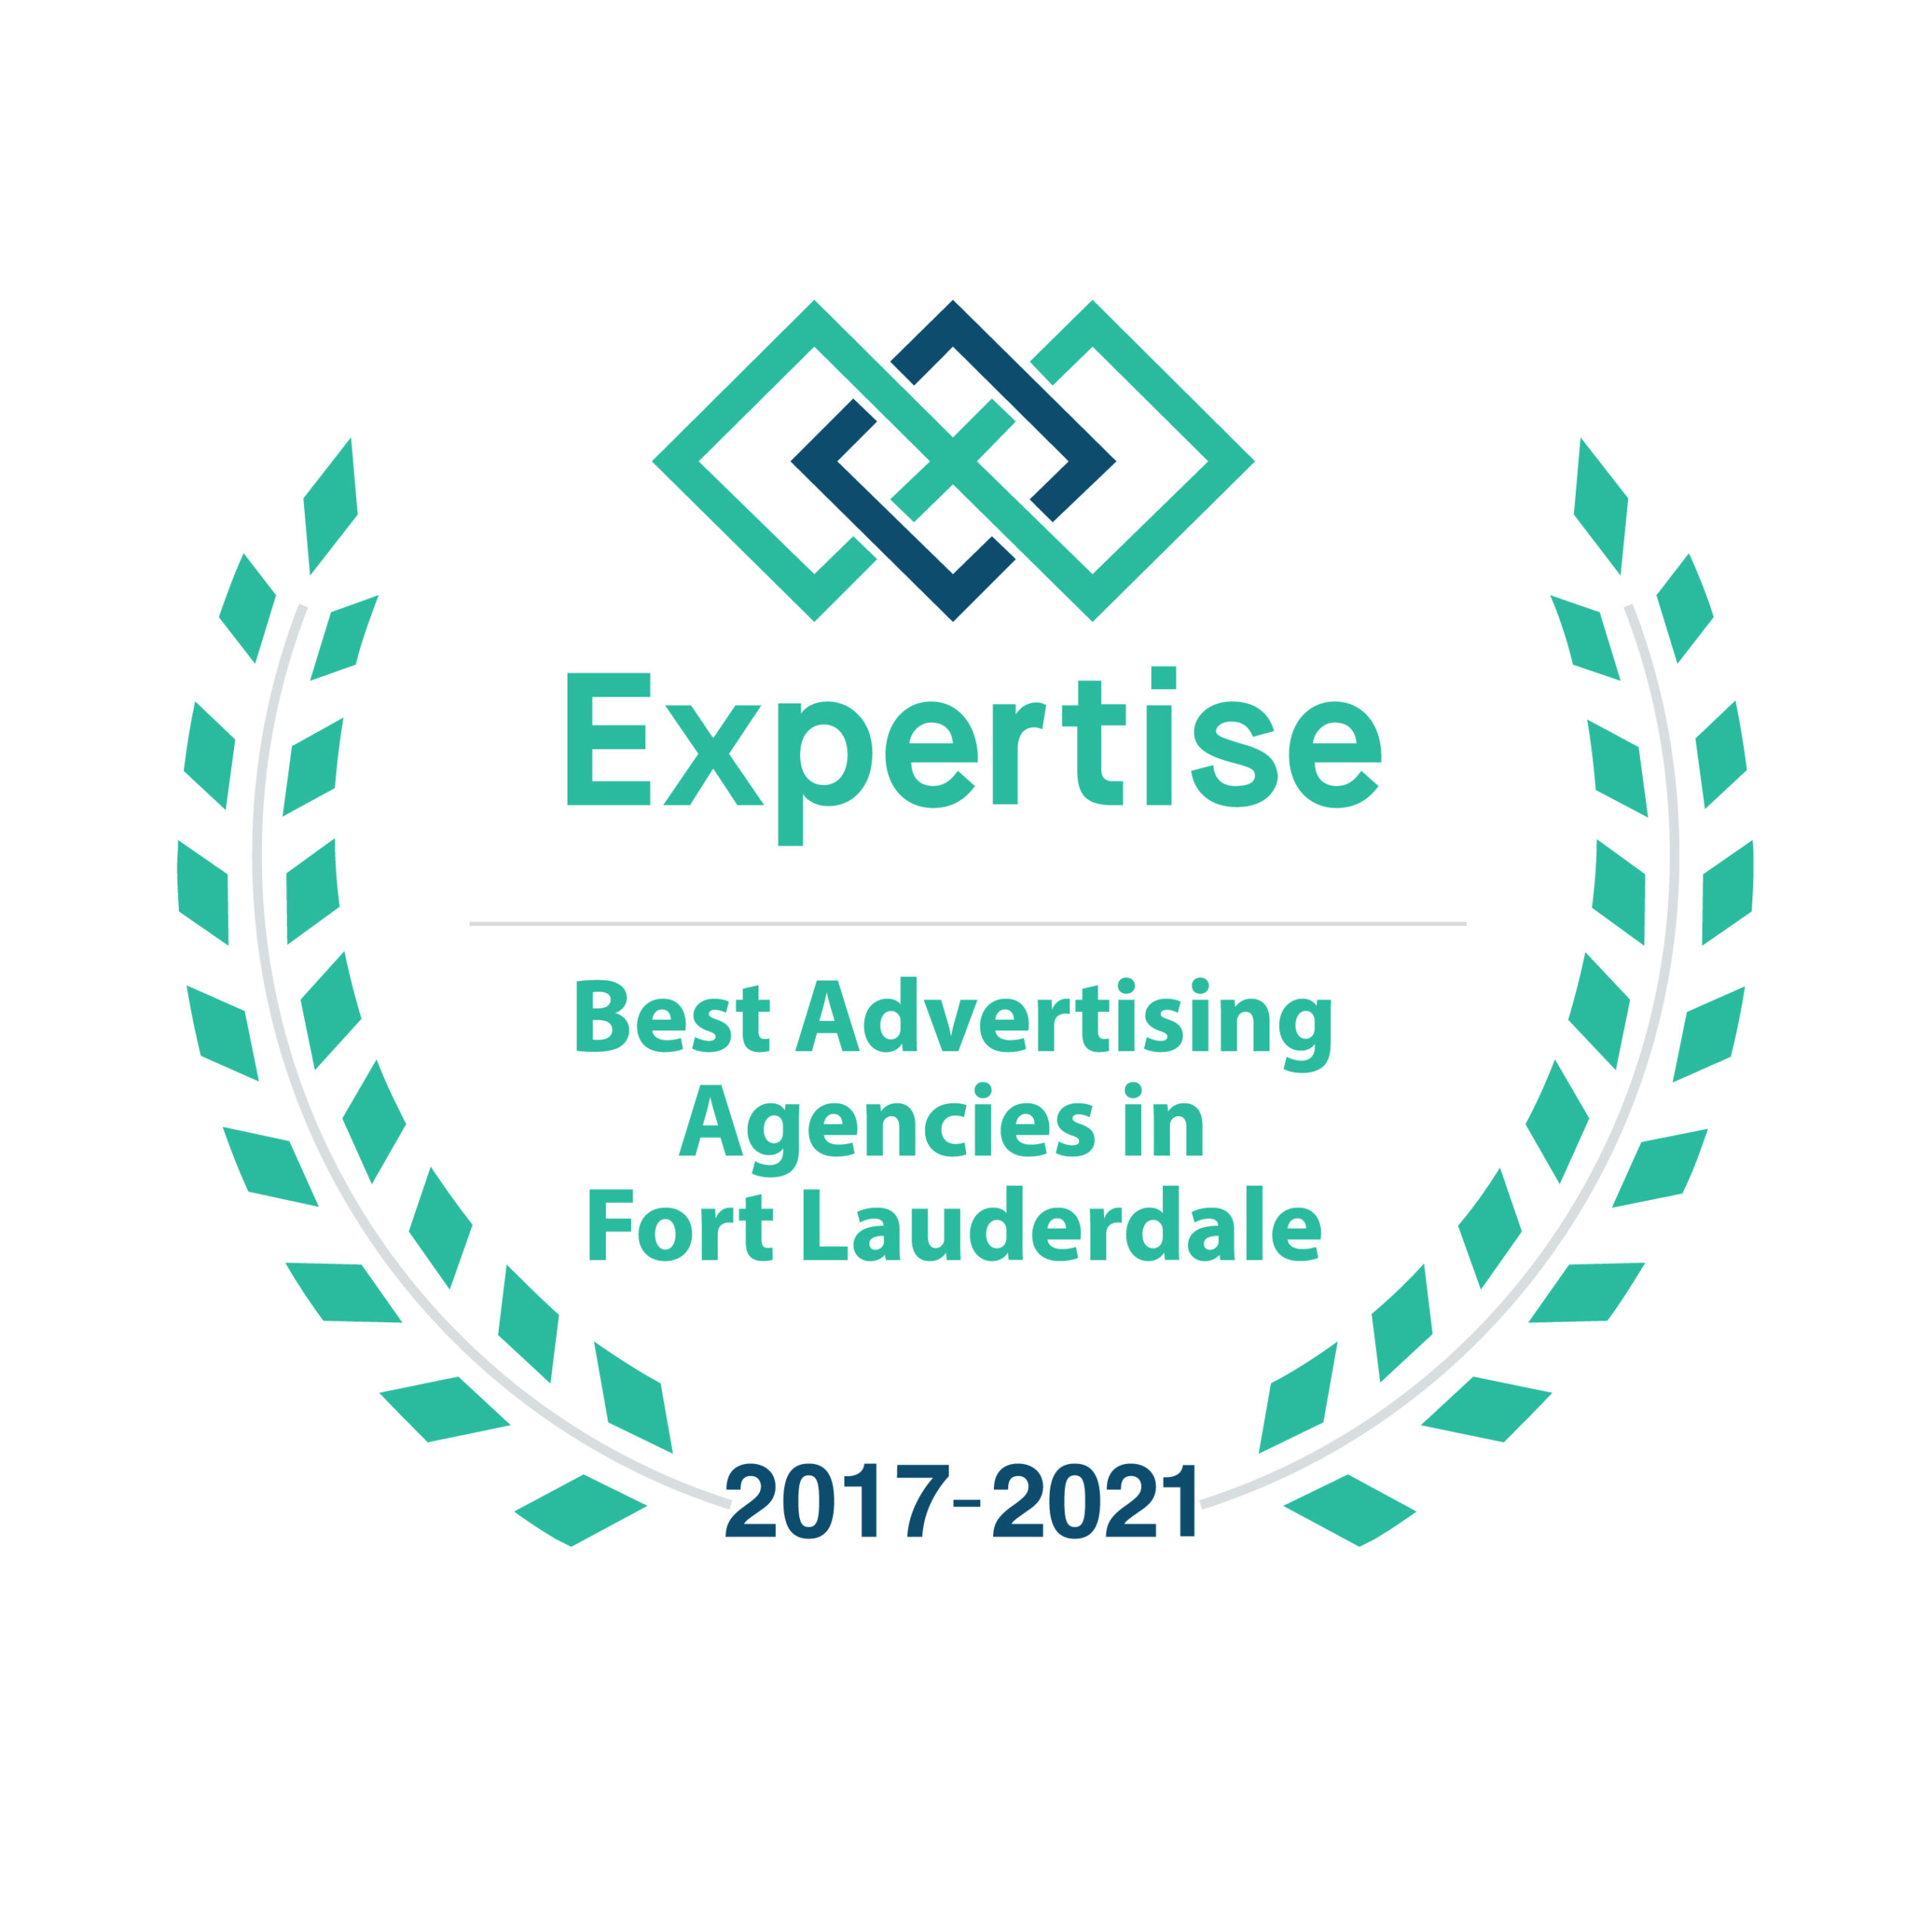 Best Advertising Agencies in Fort Lauderdale 2017-2021 by Expertise